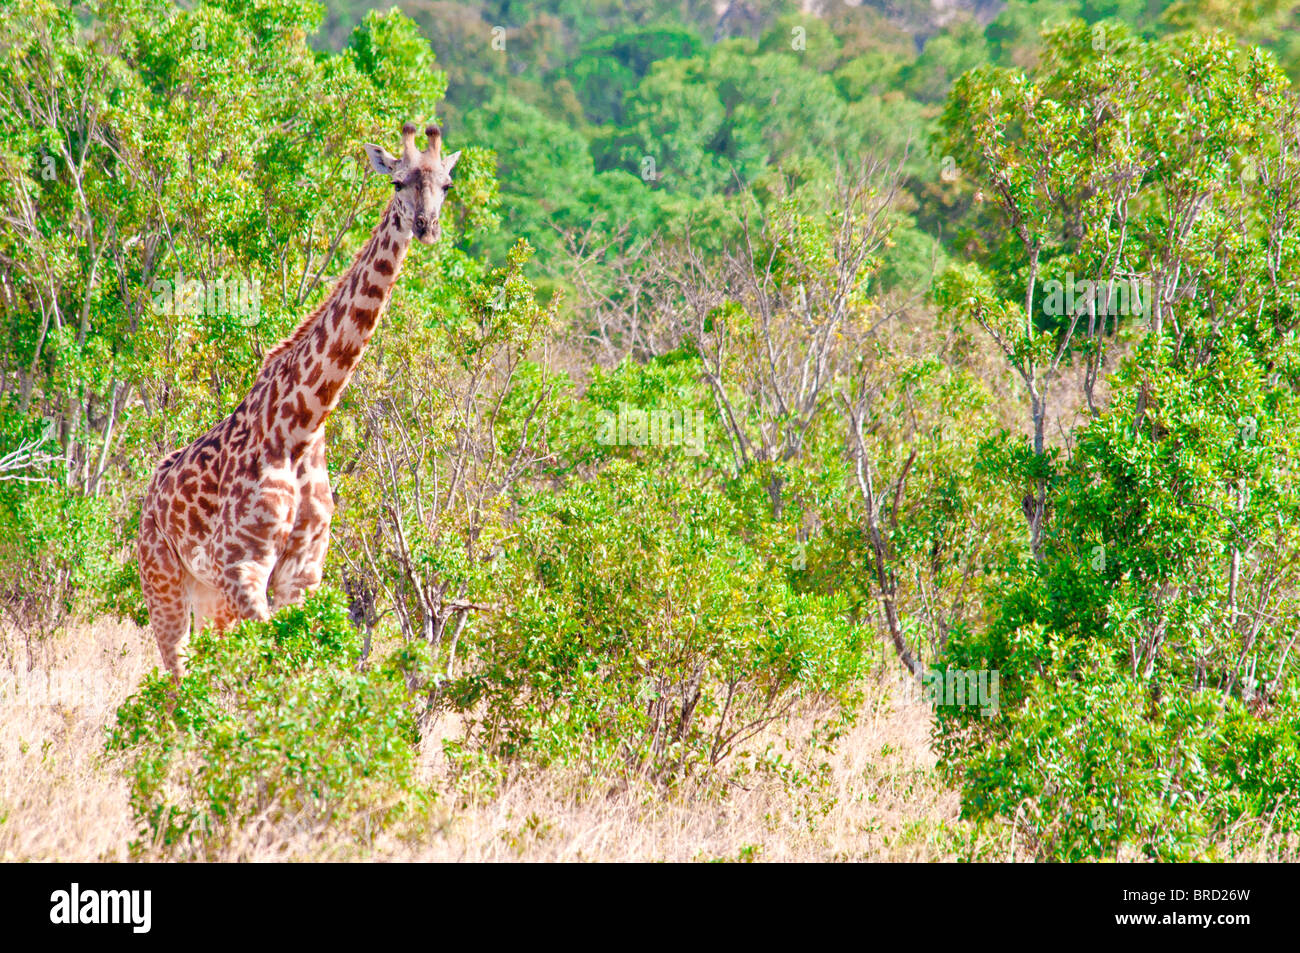 Masai Giraffe, Giraffa camelopardalis, il Masai Mara riserva nazionale, Kenya, Africa Foto Stock